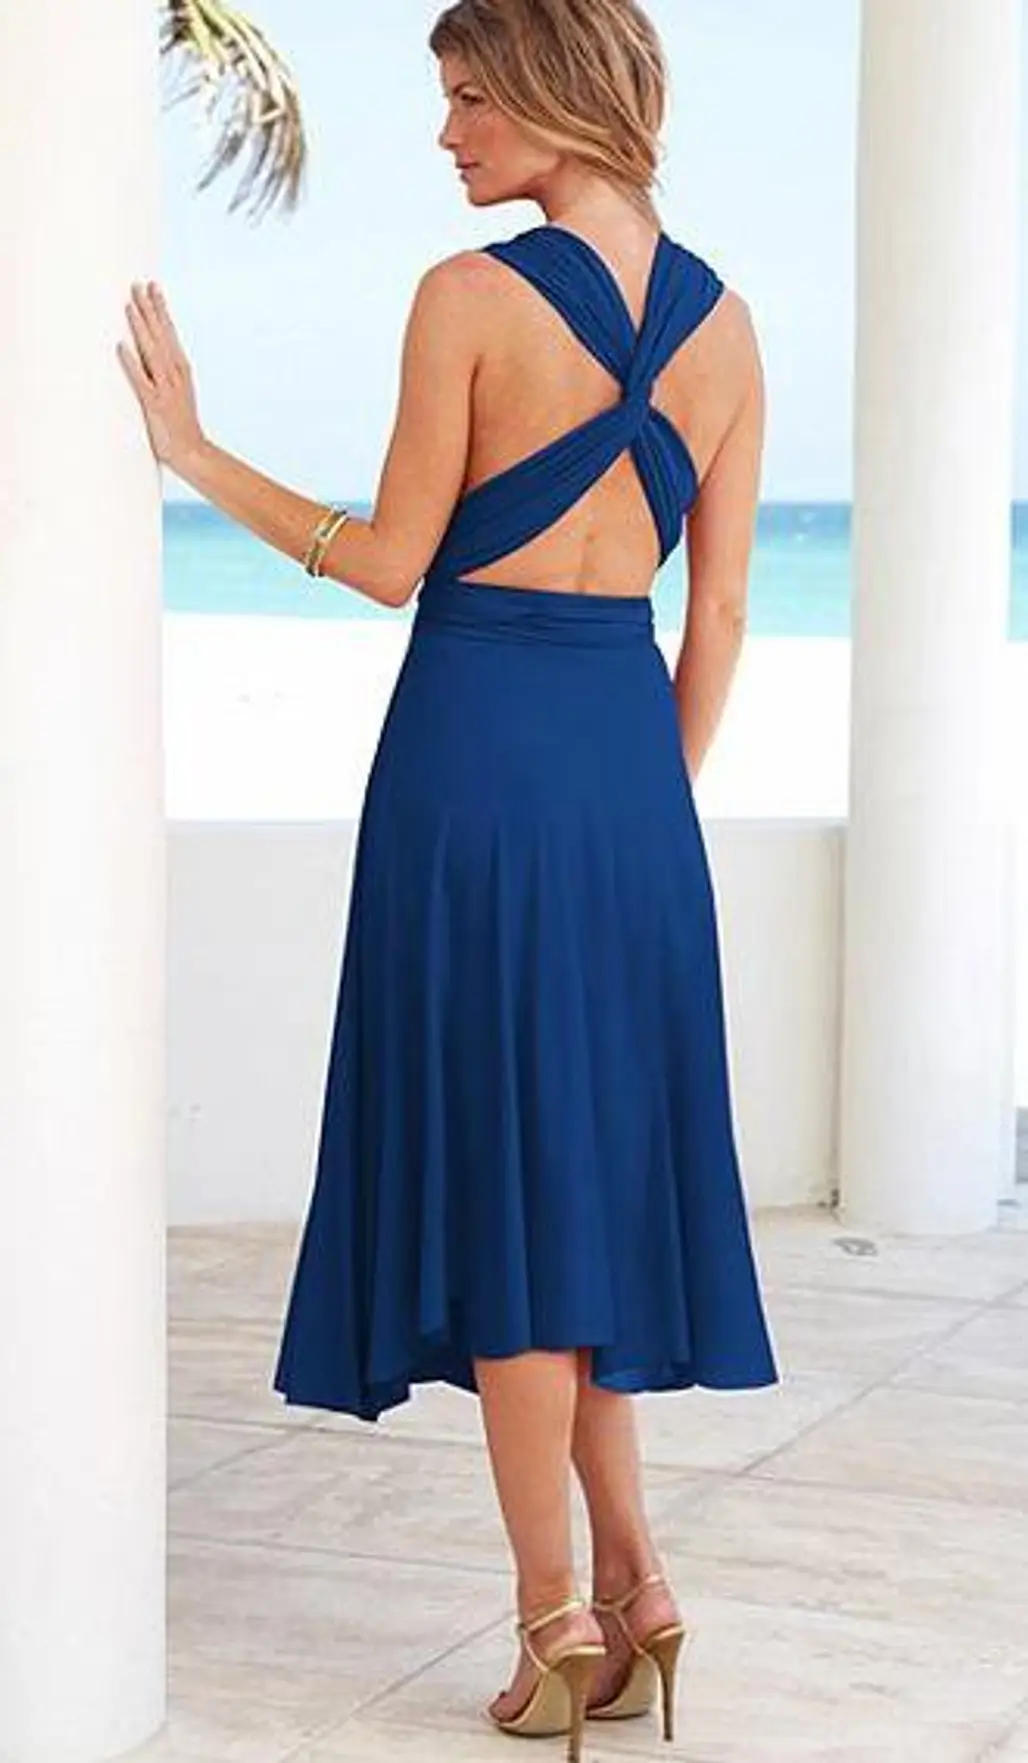 Blue Convertible Dress from Victoria’s Secret - $95